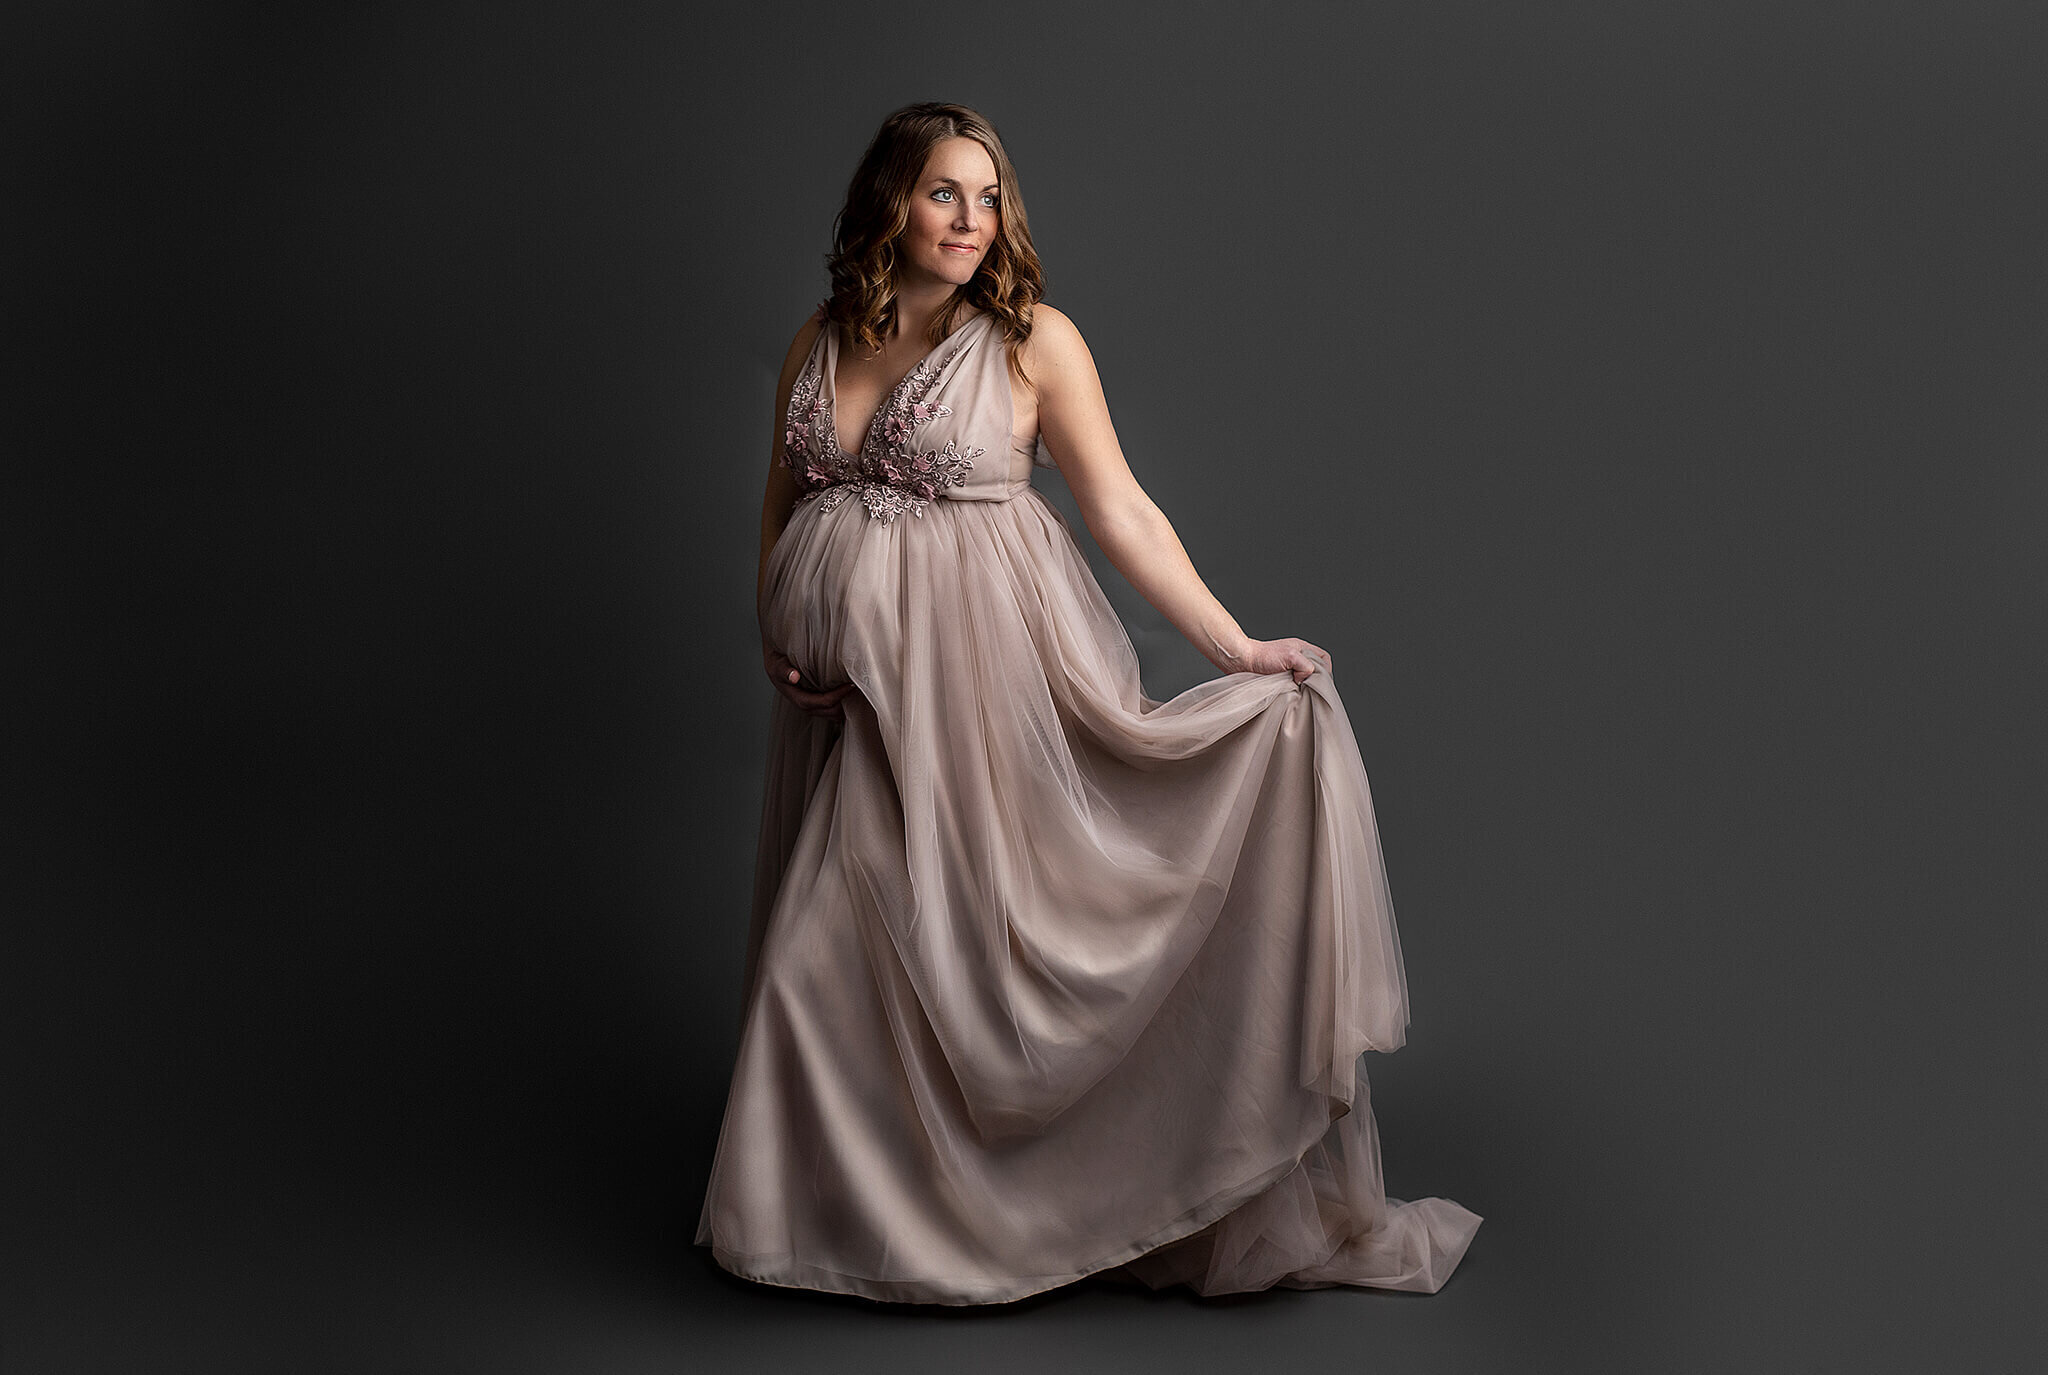 Pregnant women in flowy dress in bucyrus ohio photography studio